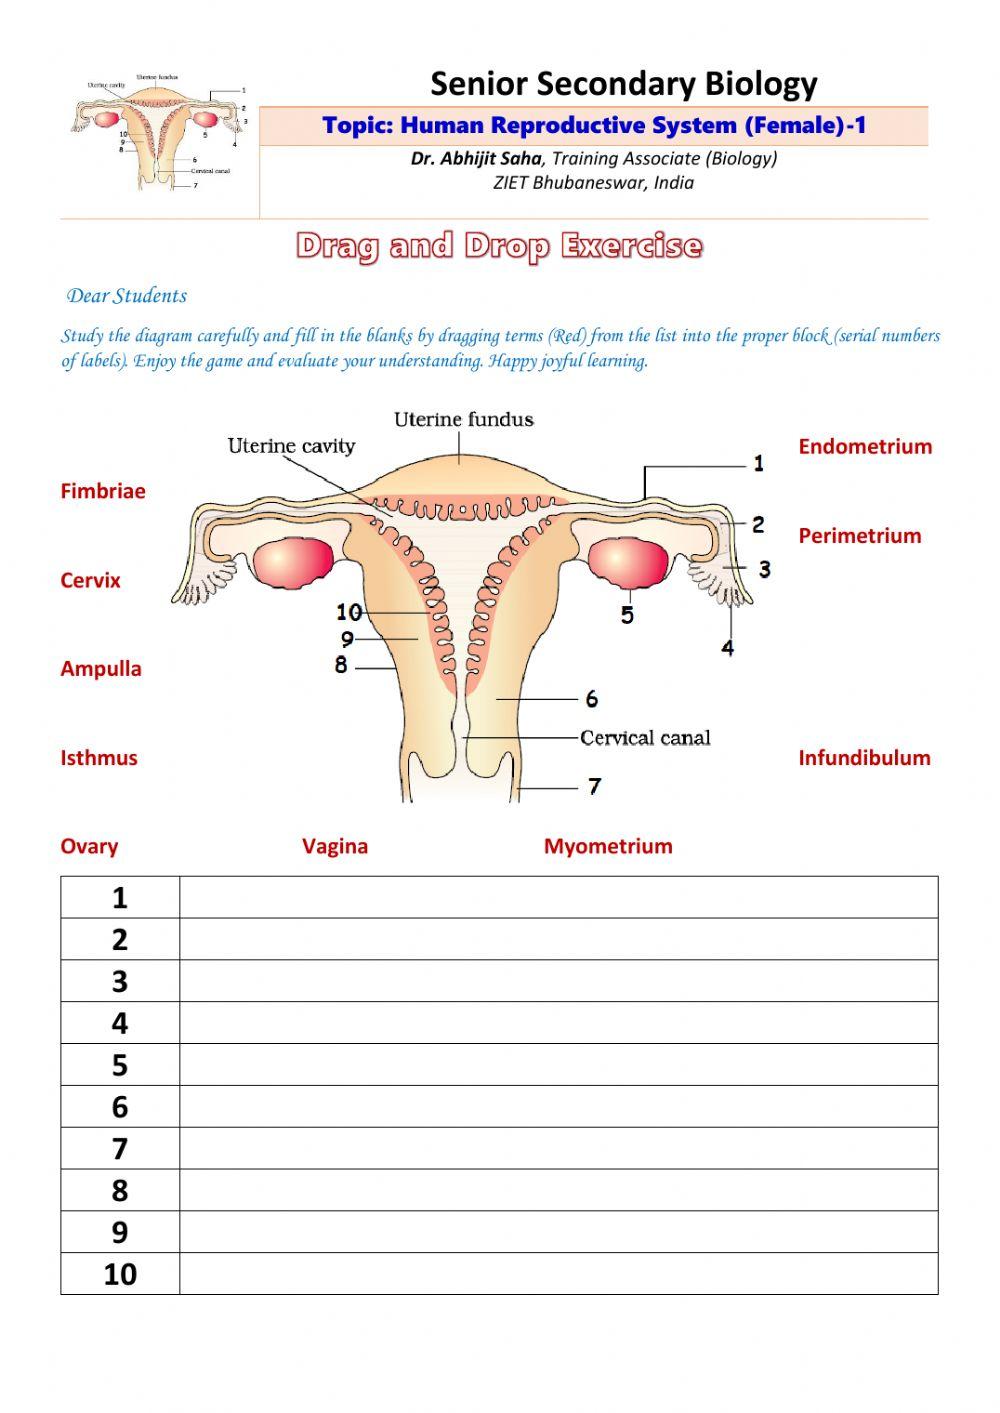 Senior Secondary Biology- Human Female Reproductive system 1